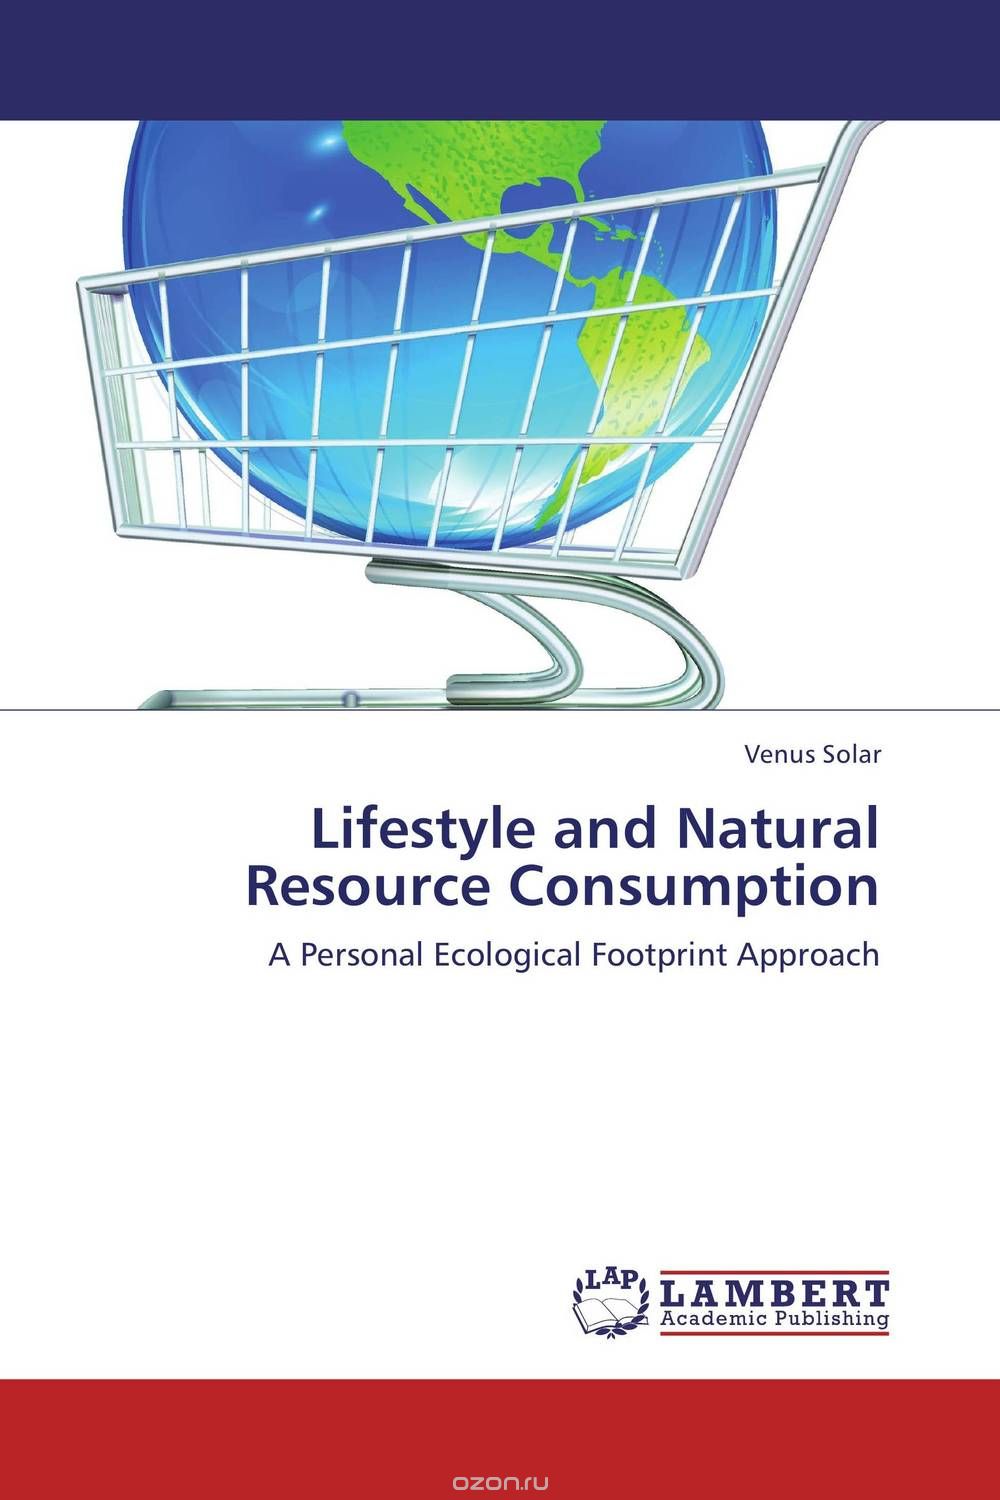 Скачать книгу "Lifestyle and Natural Resource Consumption"